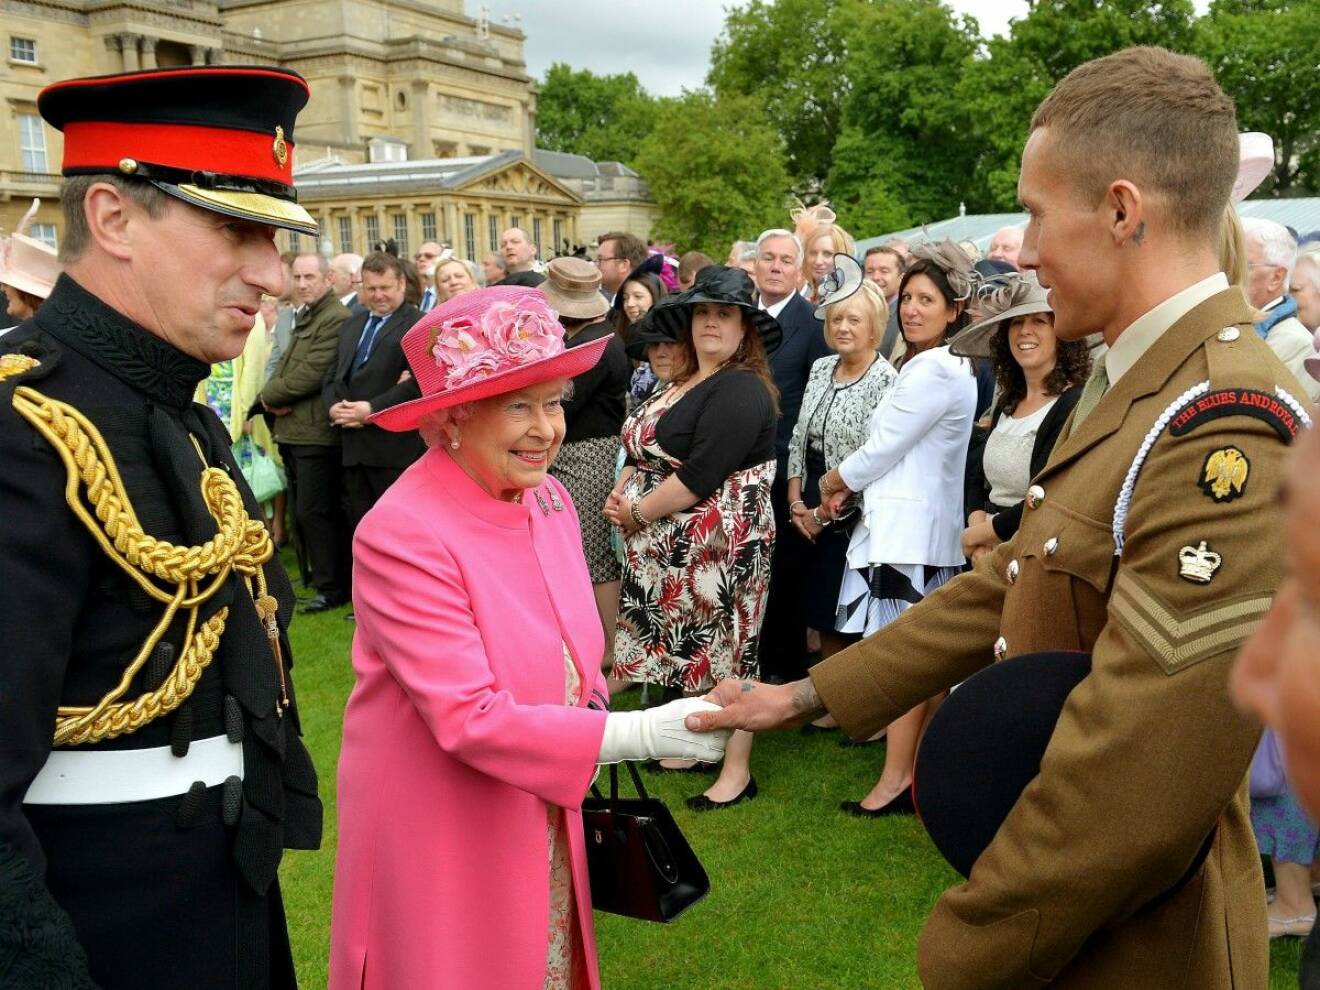 Drottning Elizabeth gardenparty på Buckingham Palace